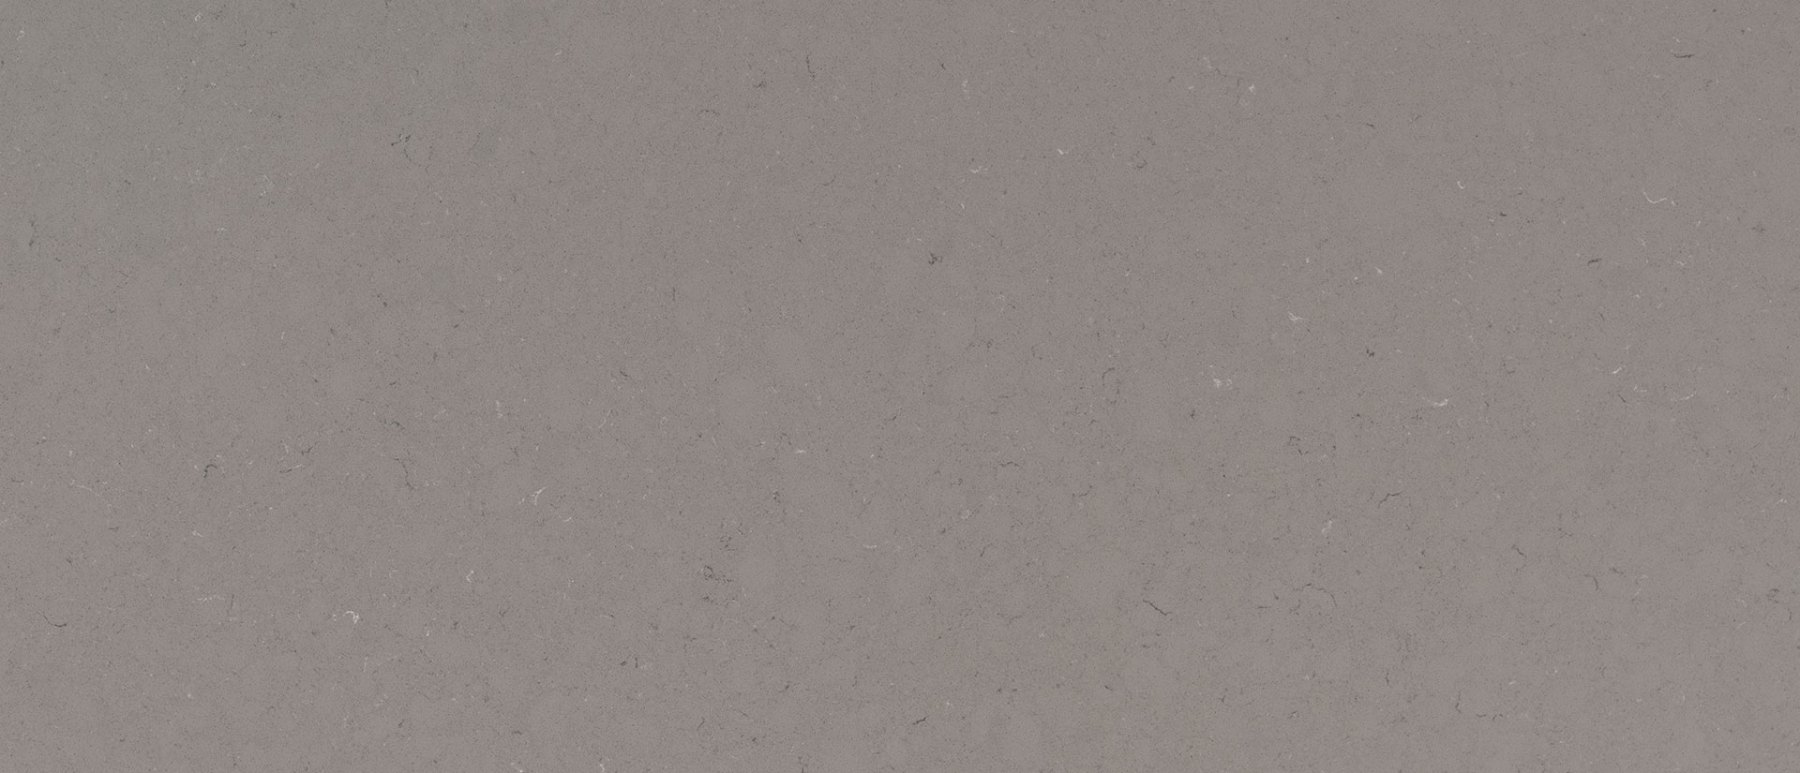 fossil-gray-quartz-1